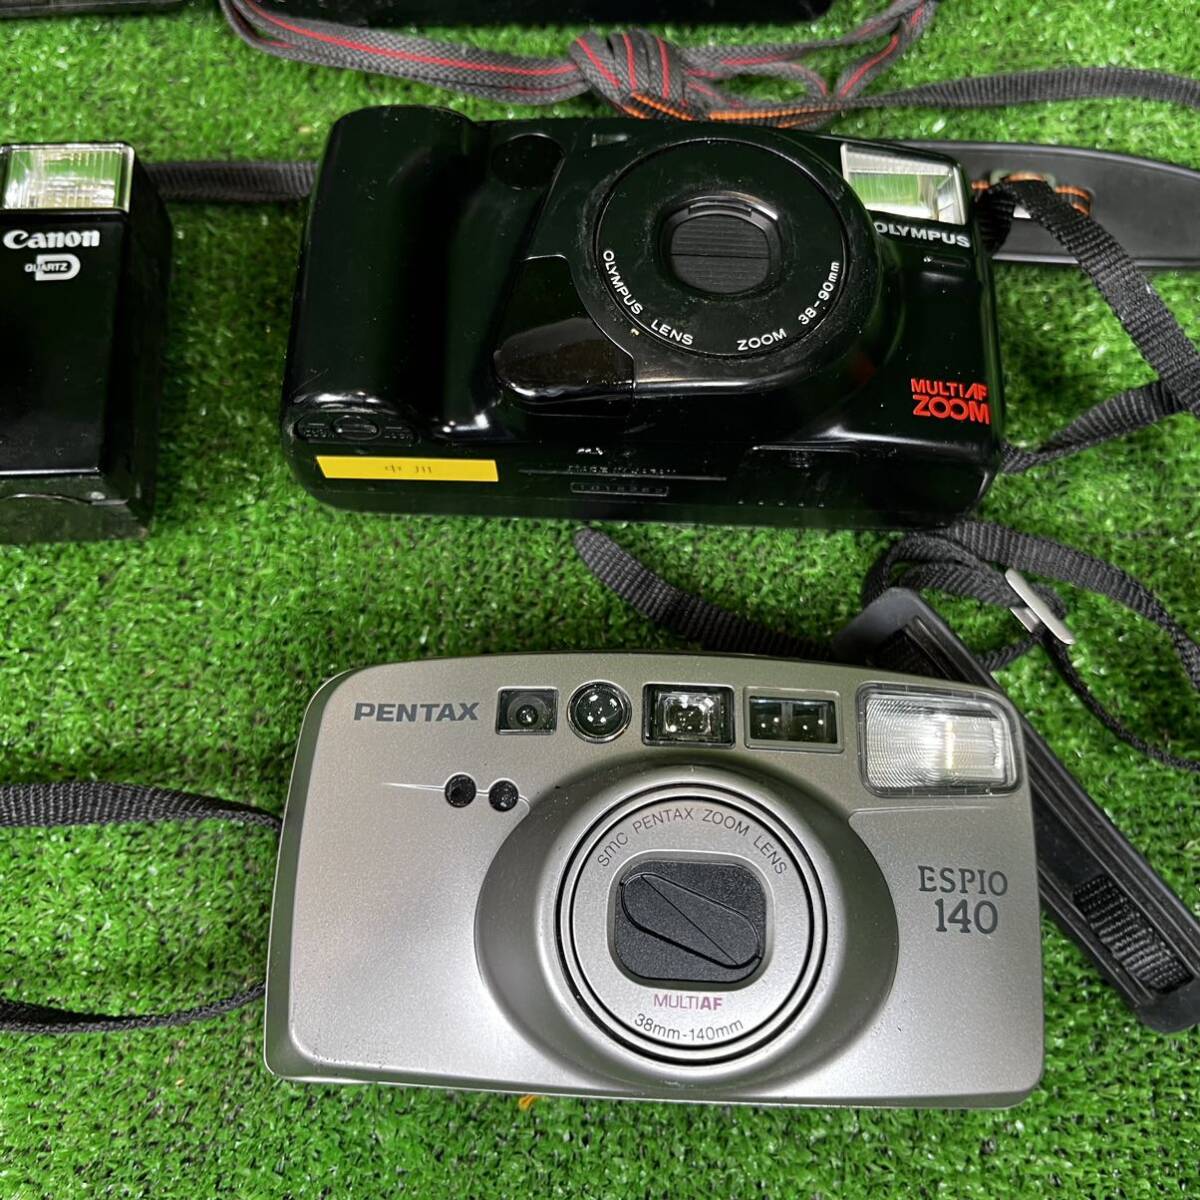 14 compact camera film camera together Canon OLYMPUS FUJI MINOLTA FUJIFILM various retro 